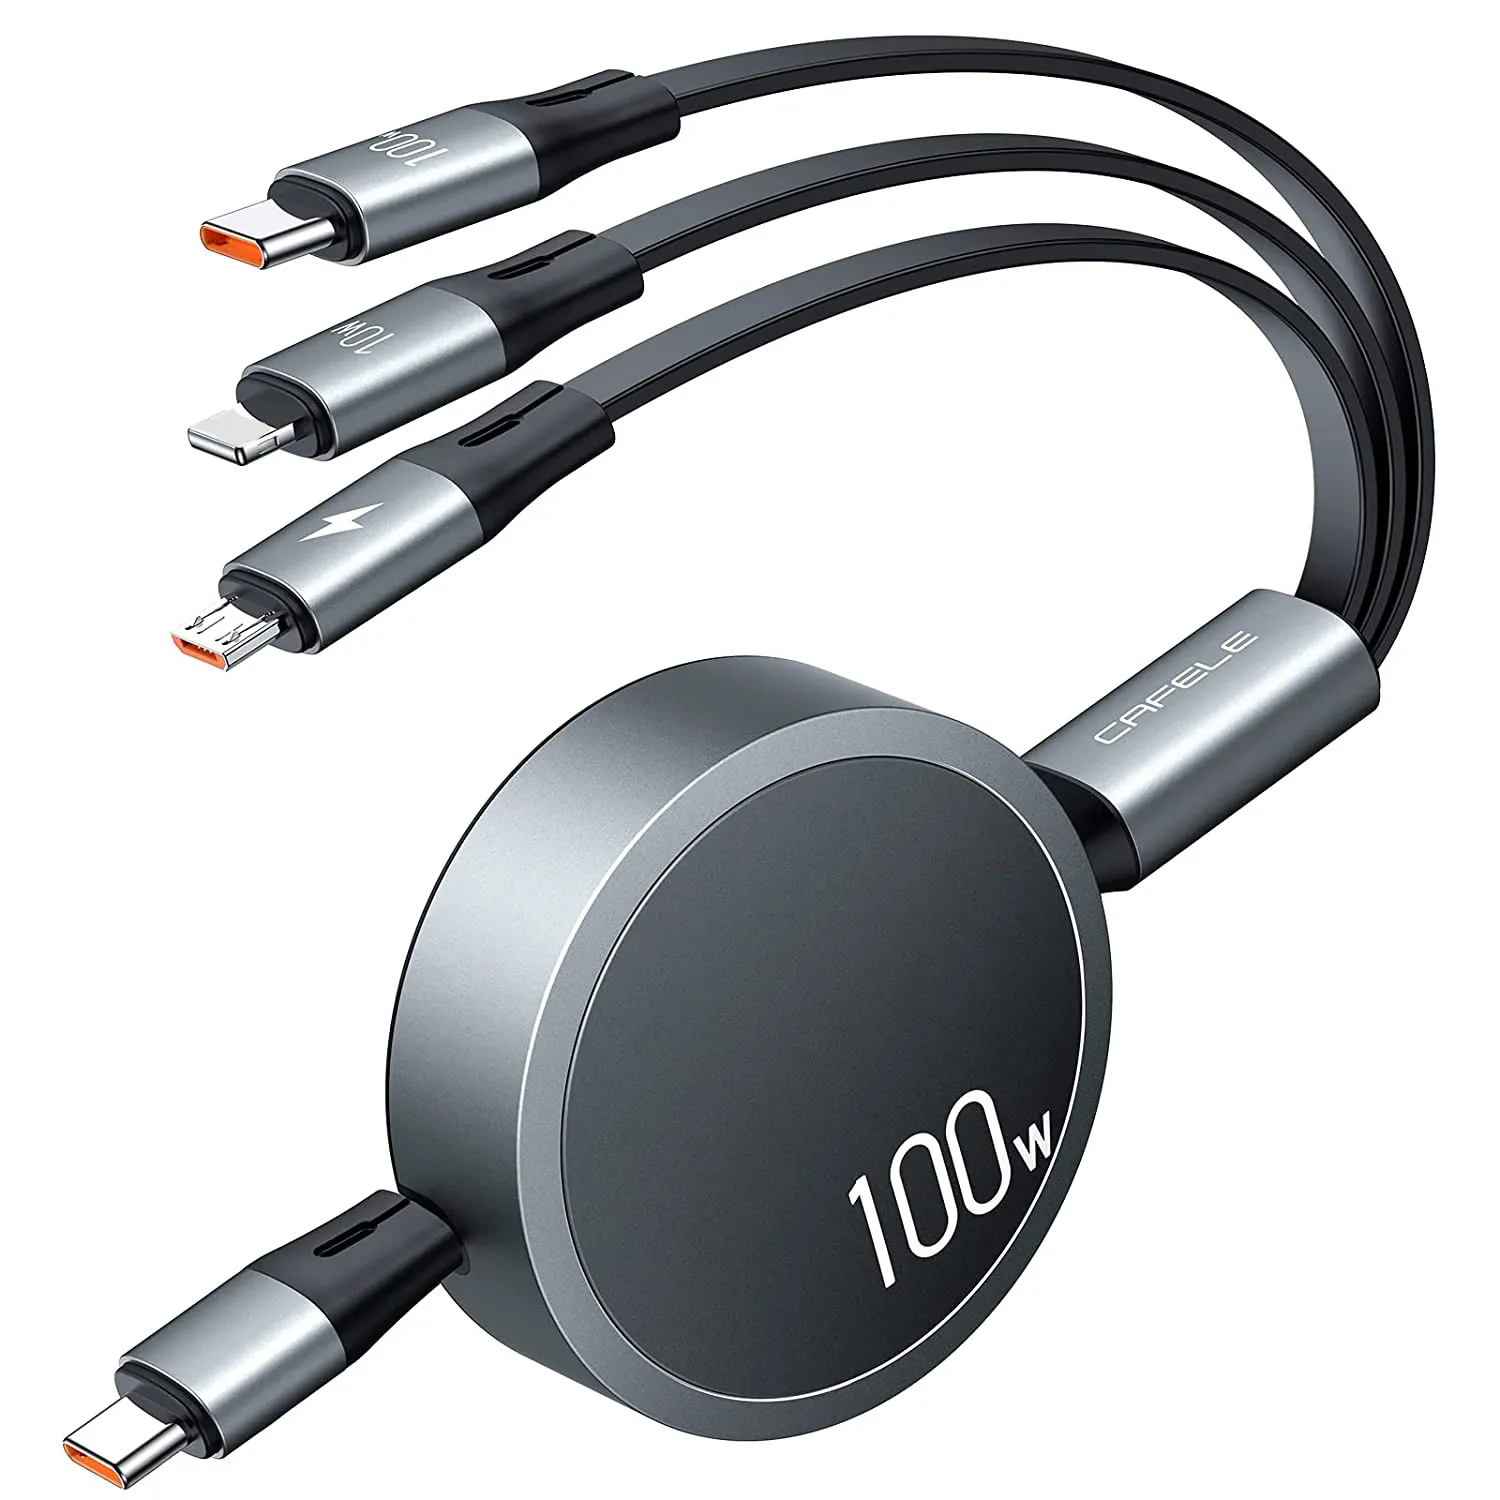 CAFELE Amazon Venta caliente 100W Carga rápida USB C Cable 3 en 1 Cable DE DATOS USB retráctil Tipo C para teléfono móvil Laptop